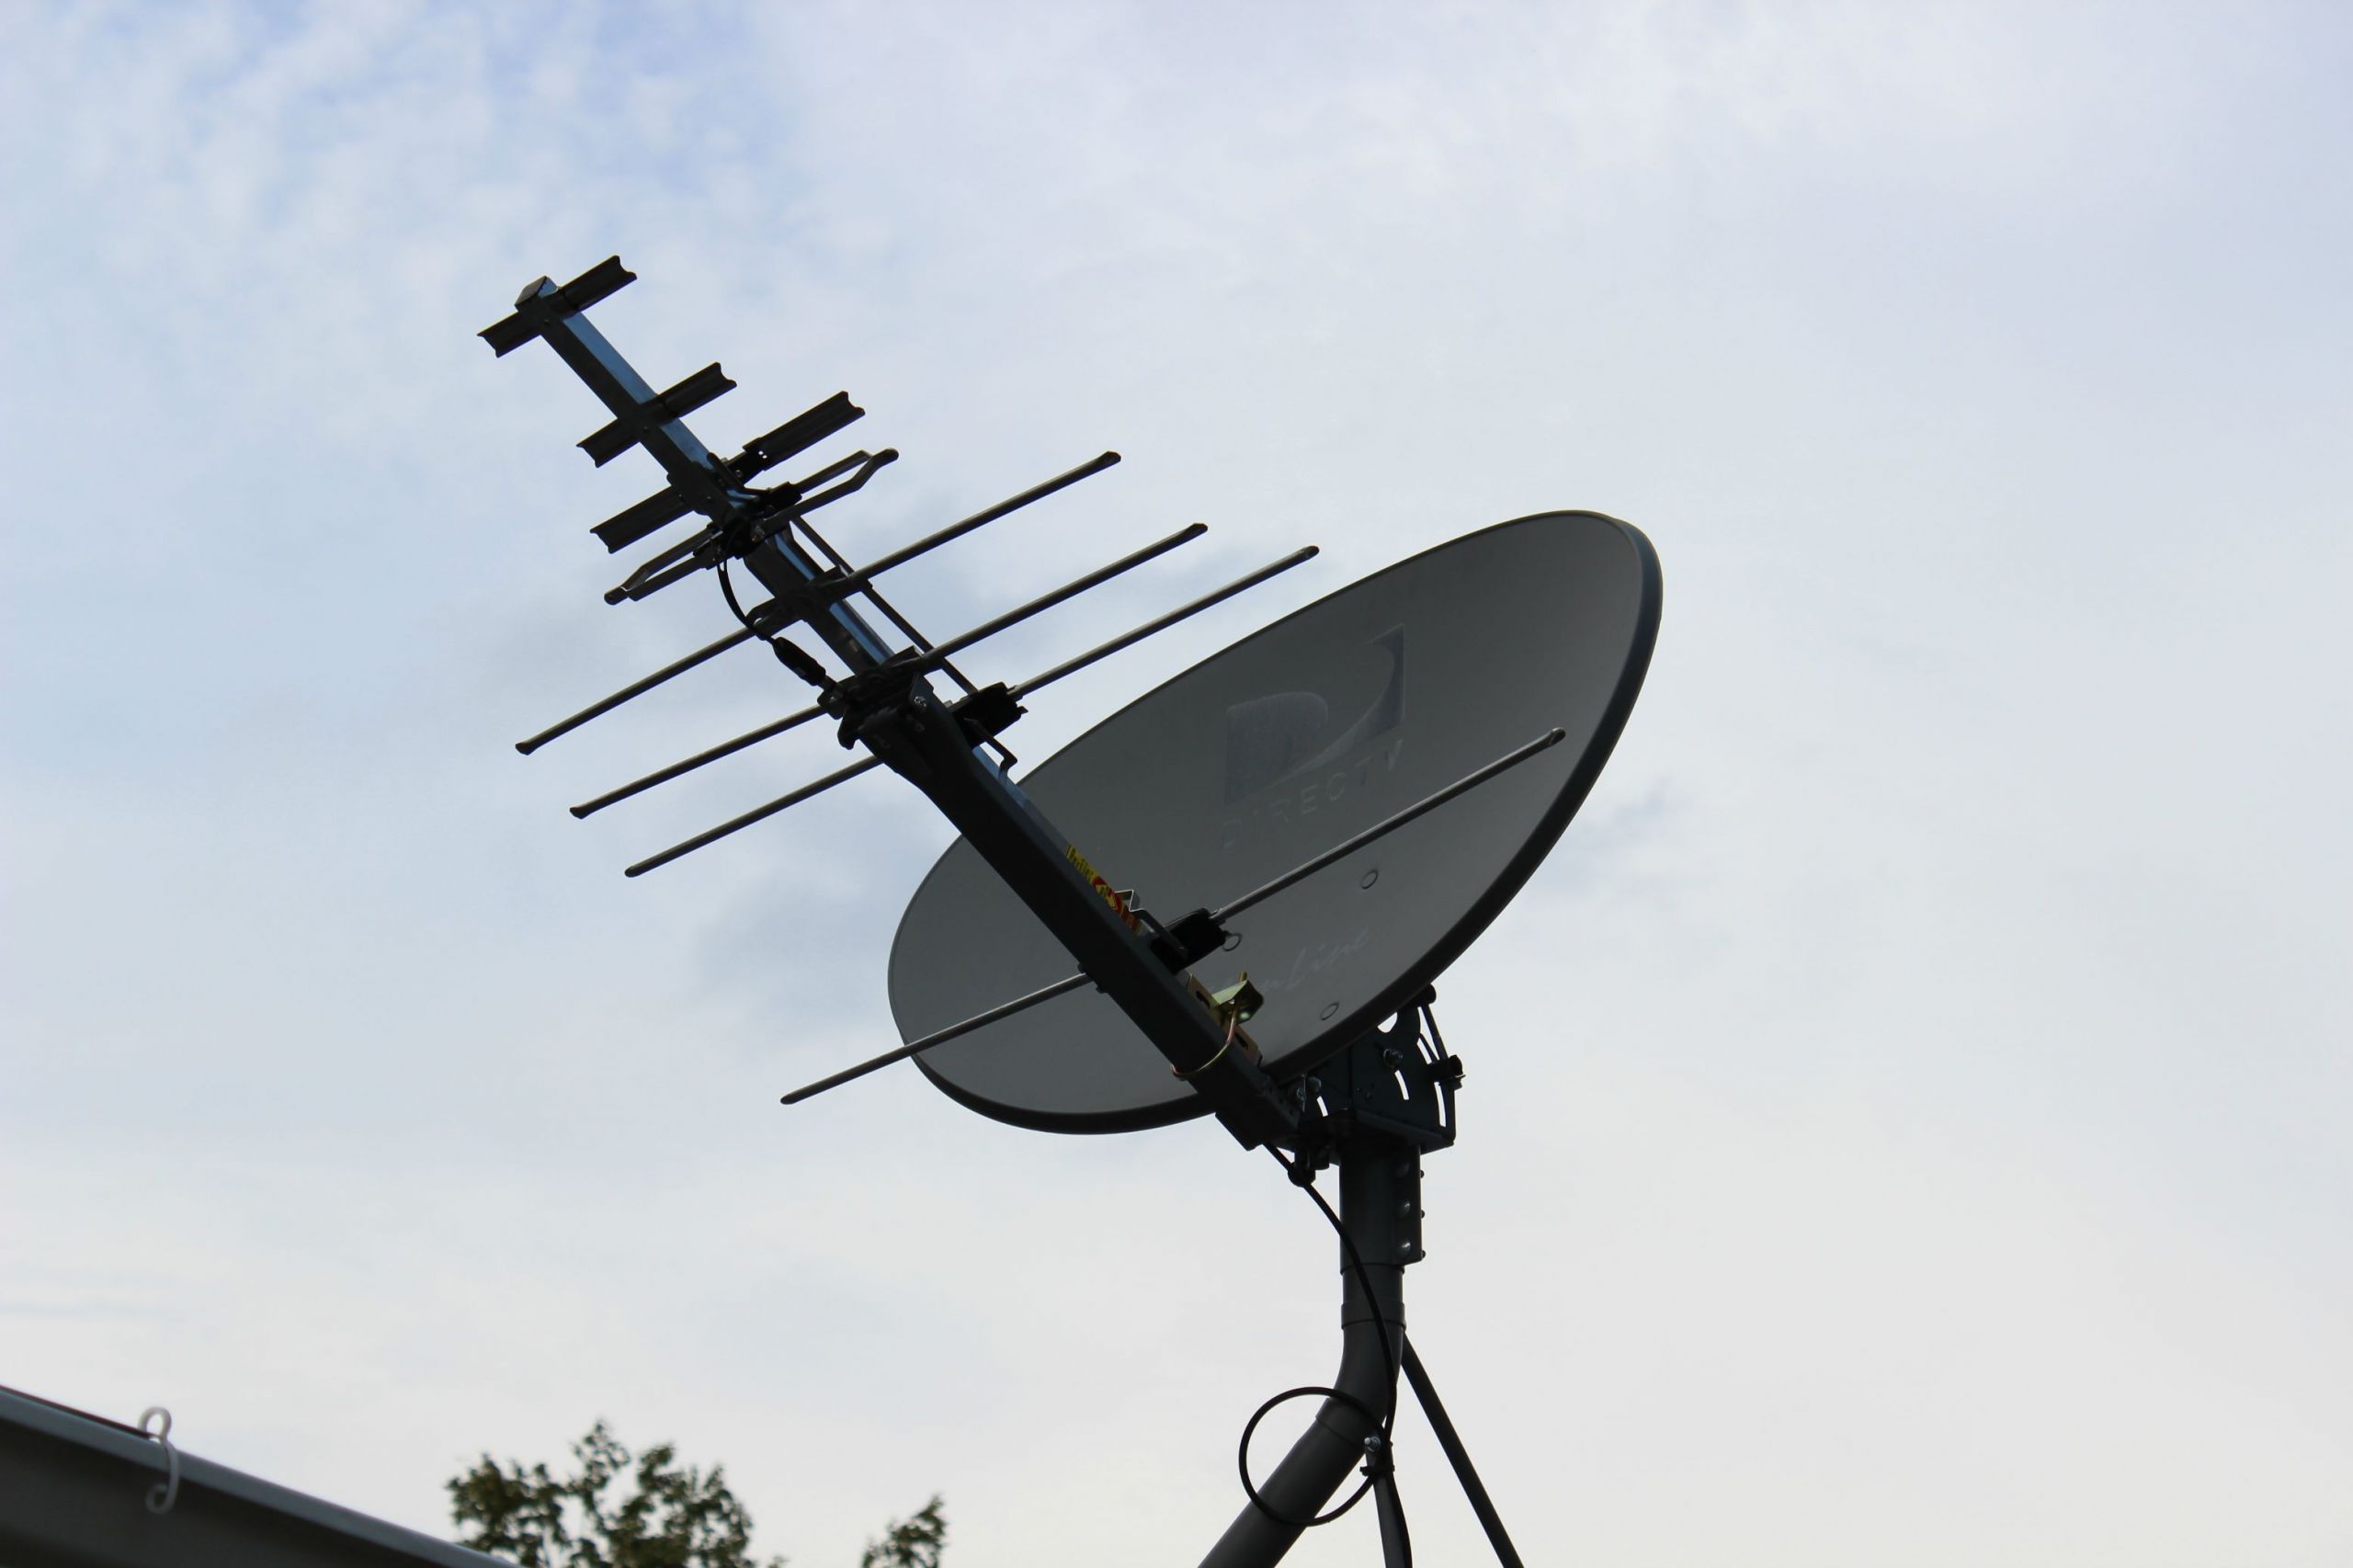 DIY Outdoor Hdtv Antenna
 I turned my satellite dish into a badass HDTV antenna